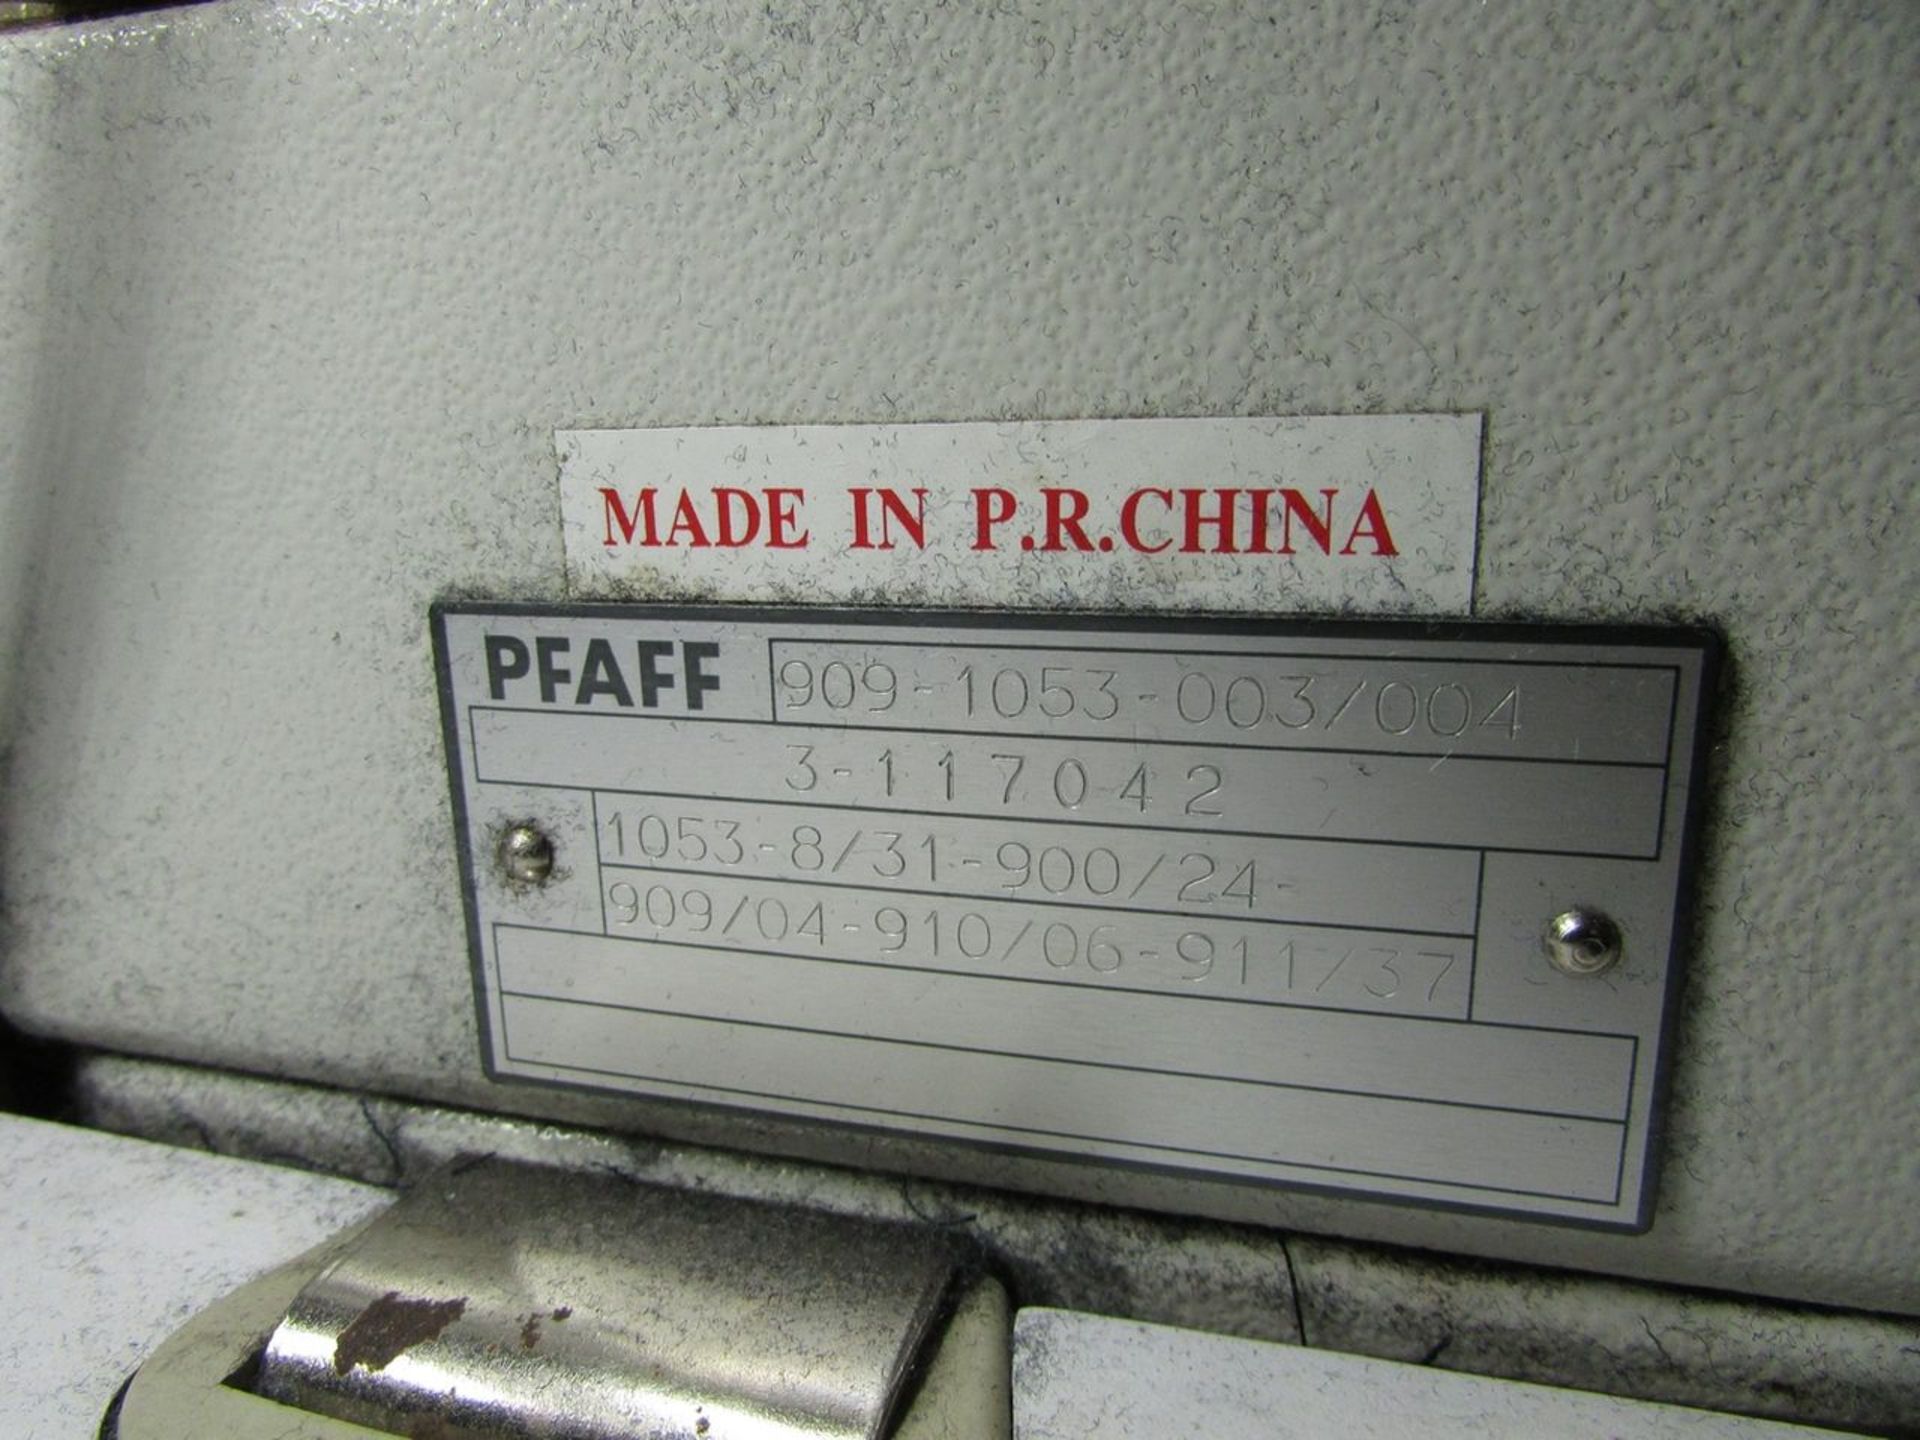 Pfaff Model 1053-8/31-900/24 (S/N: 3-117042) Single Needle Lockstitch Sewing Machine, Trimmer, - Image 10 of 10